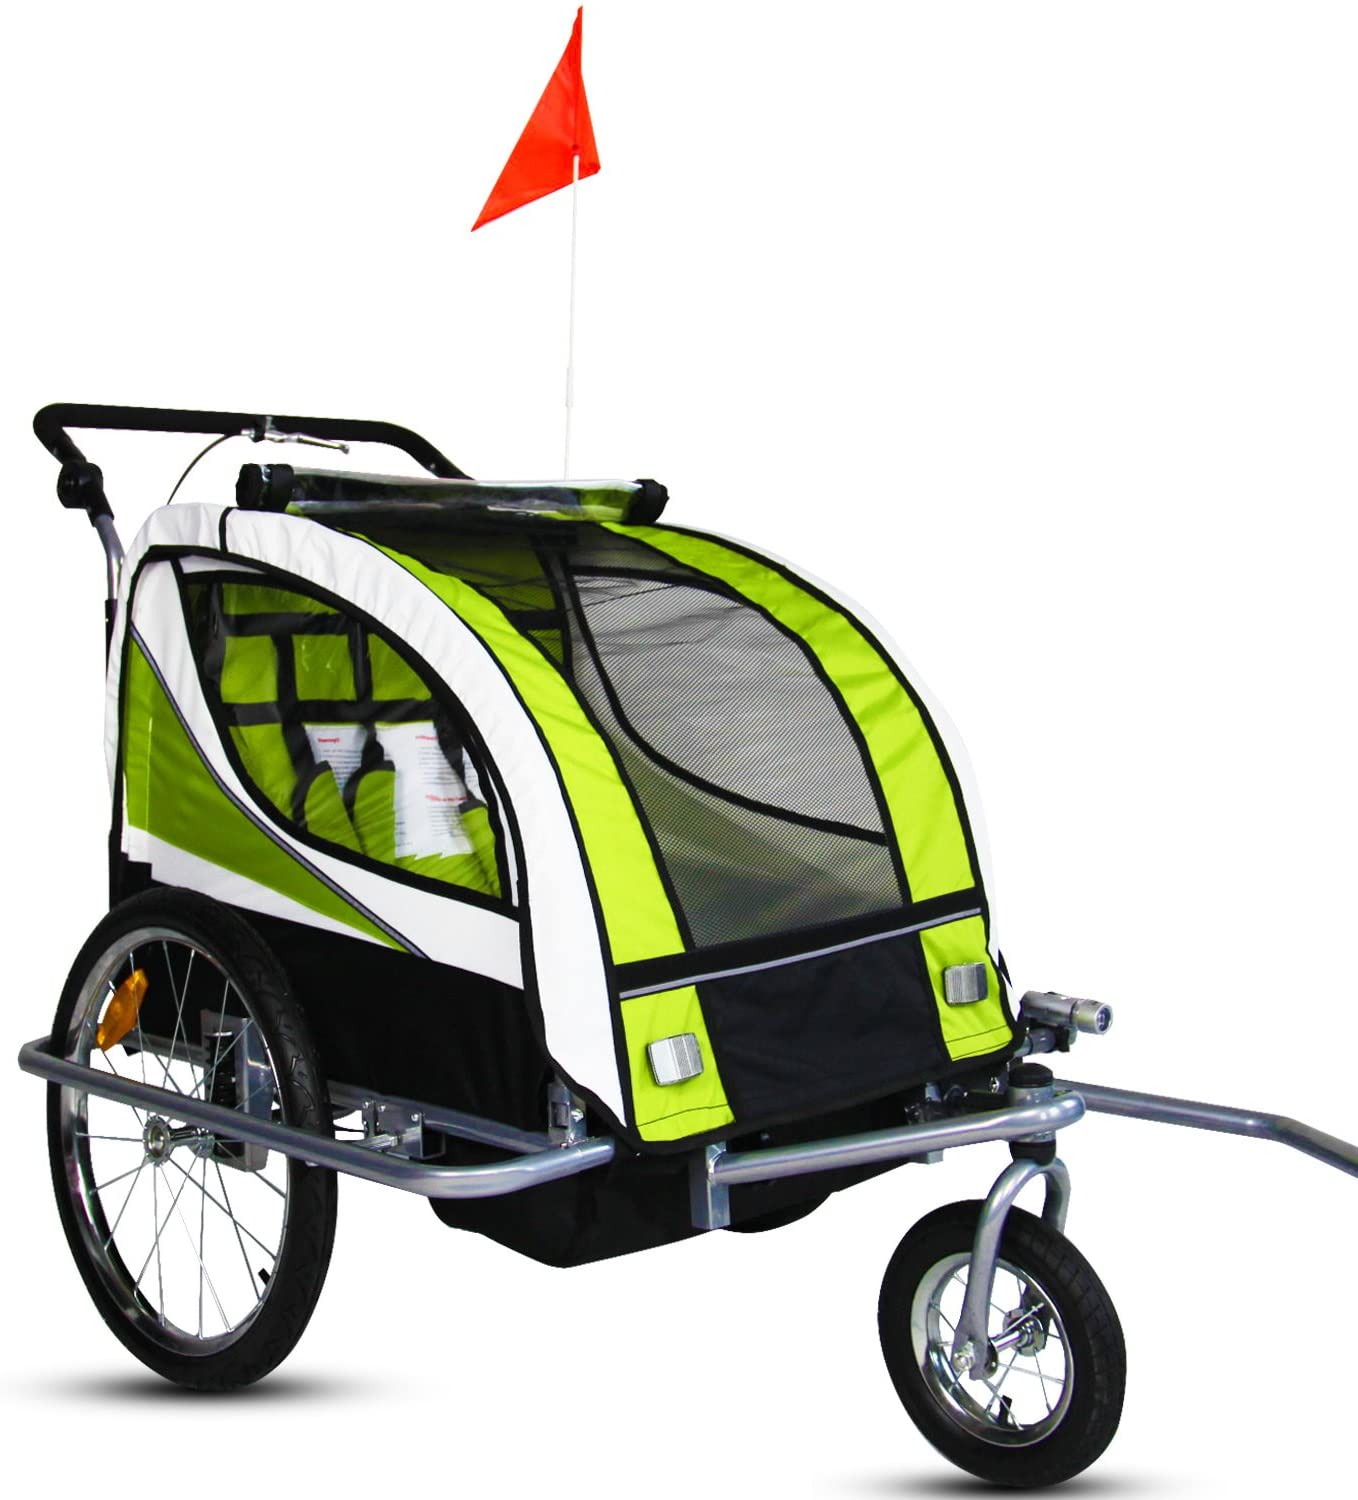 Kinbor New 2 in 1 Bicycle Pet Trailer Stroller